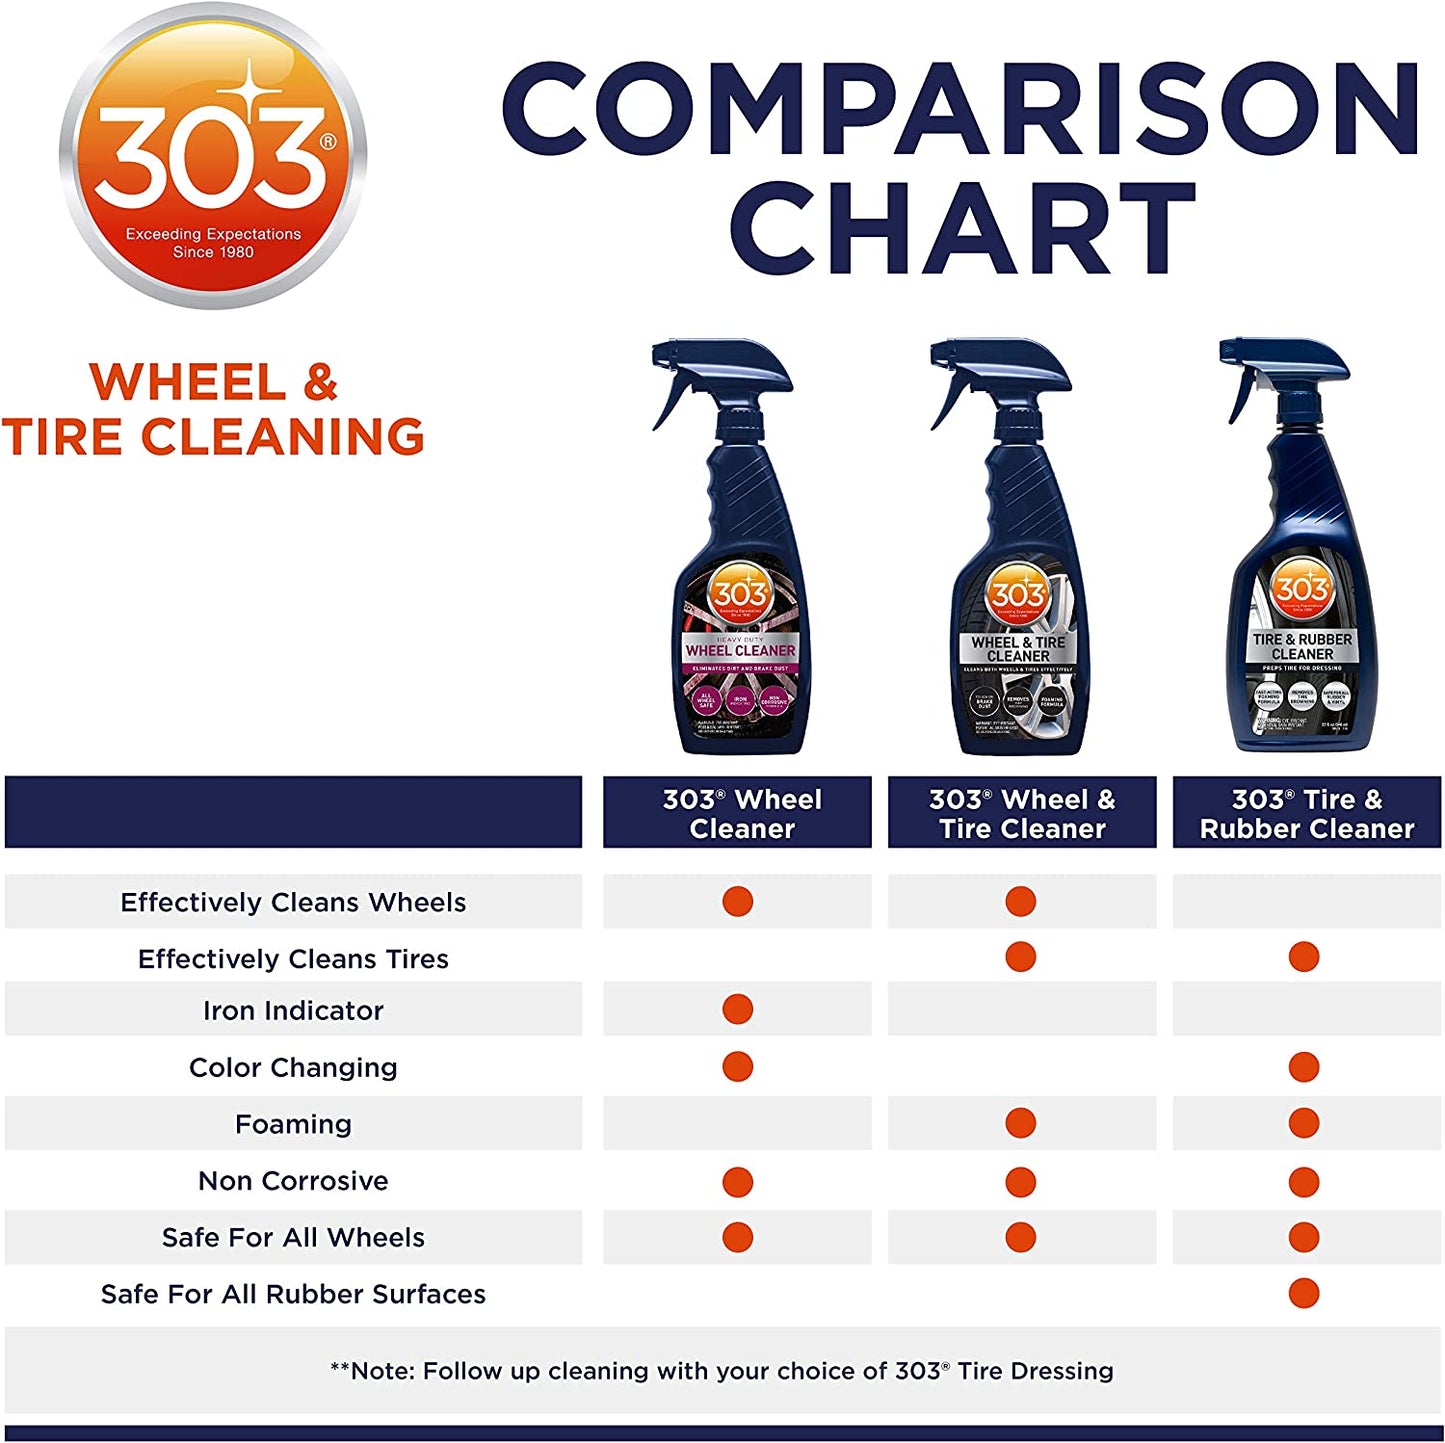 303 Wheel & Tire Cleaner (15.5oz/ 440ml)